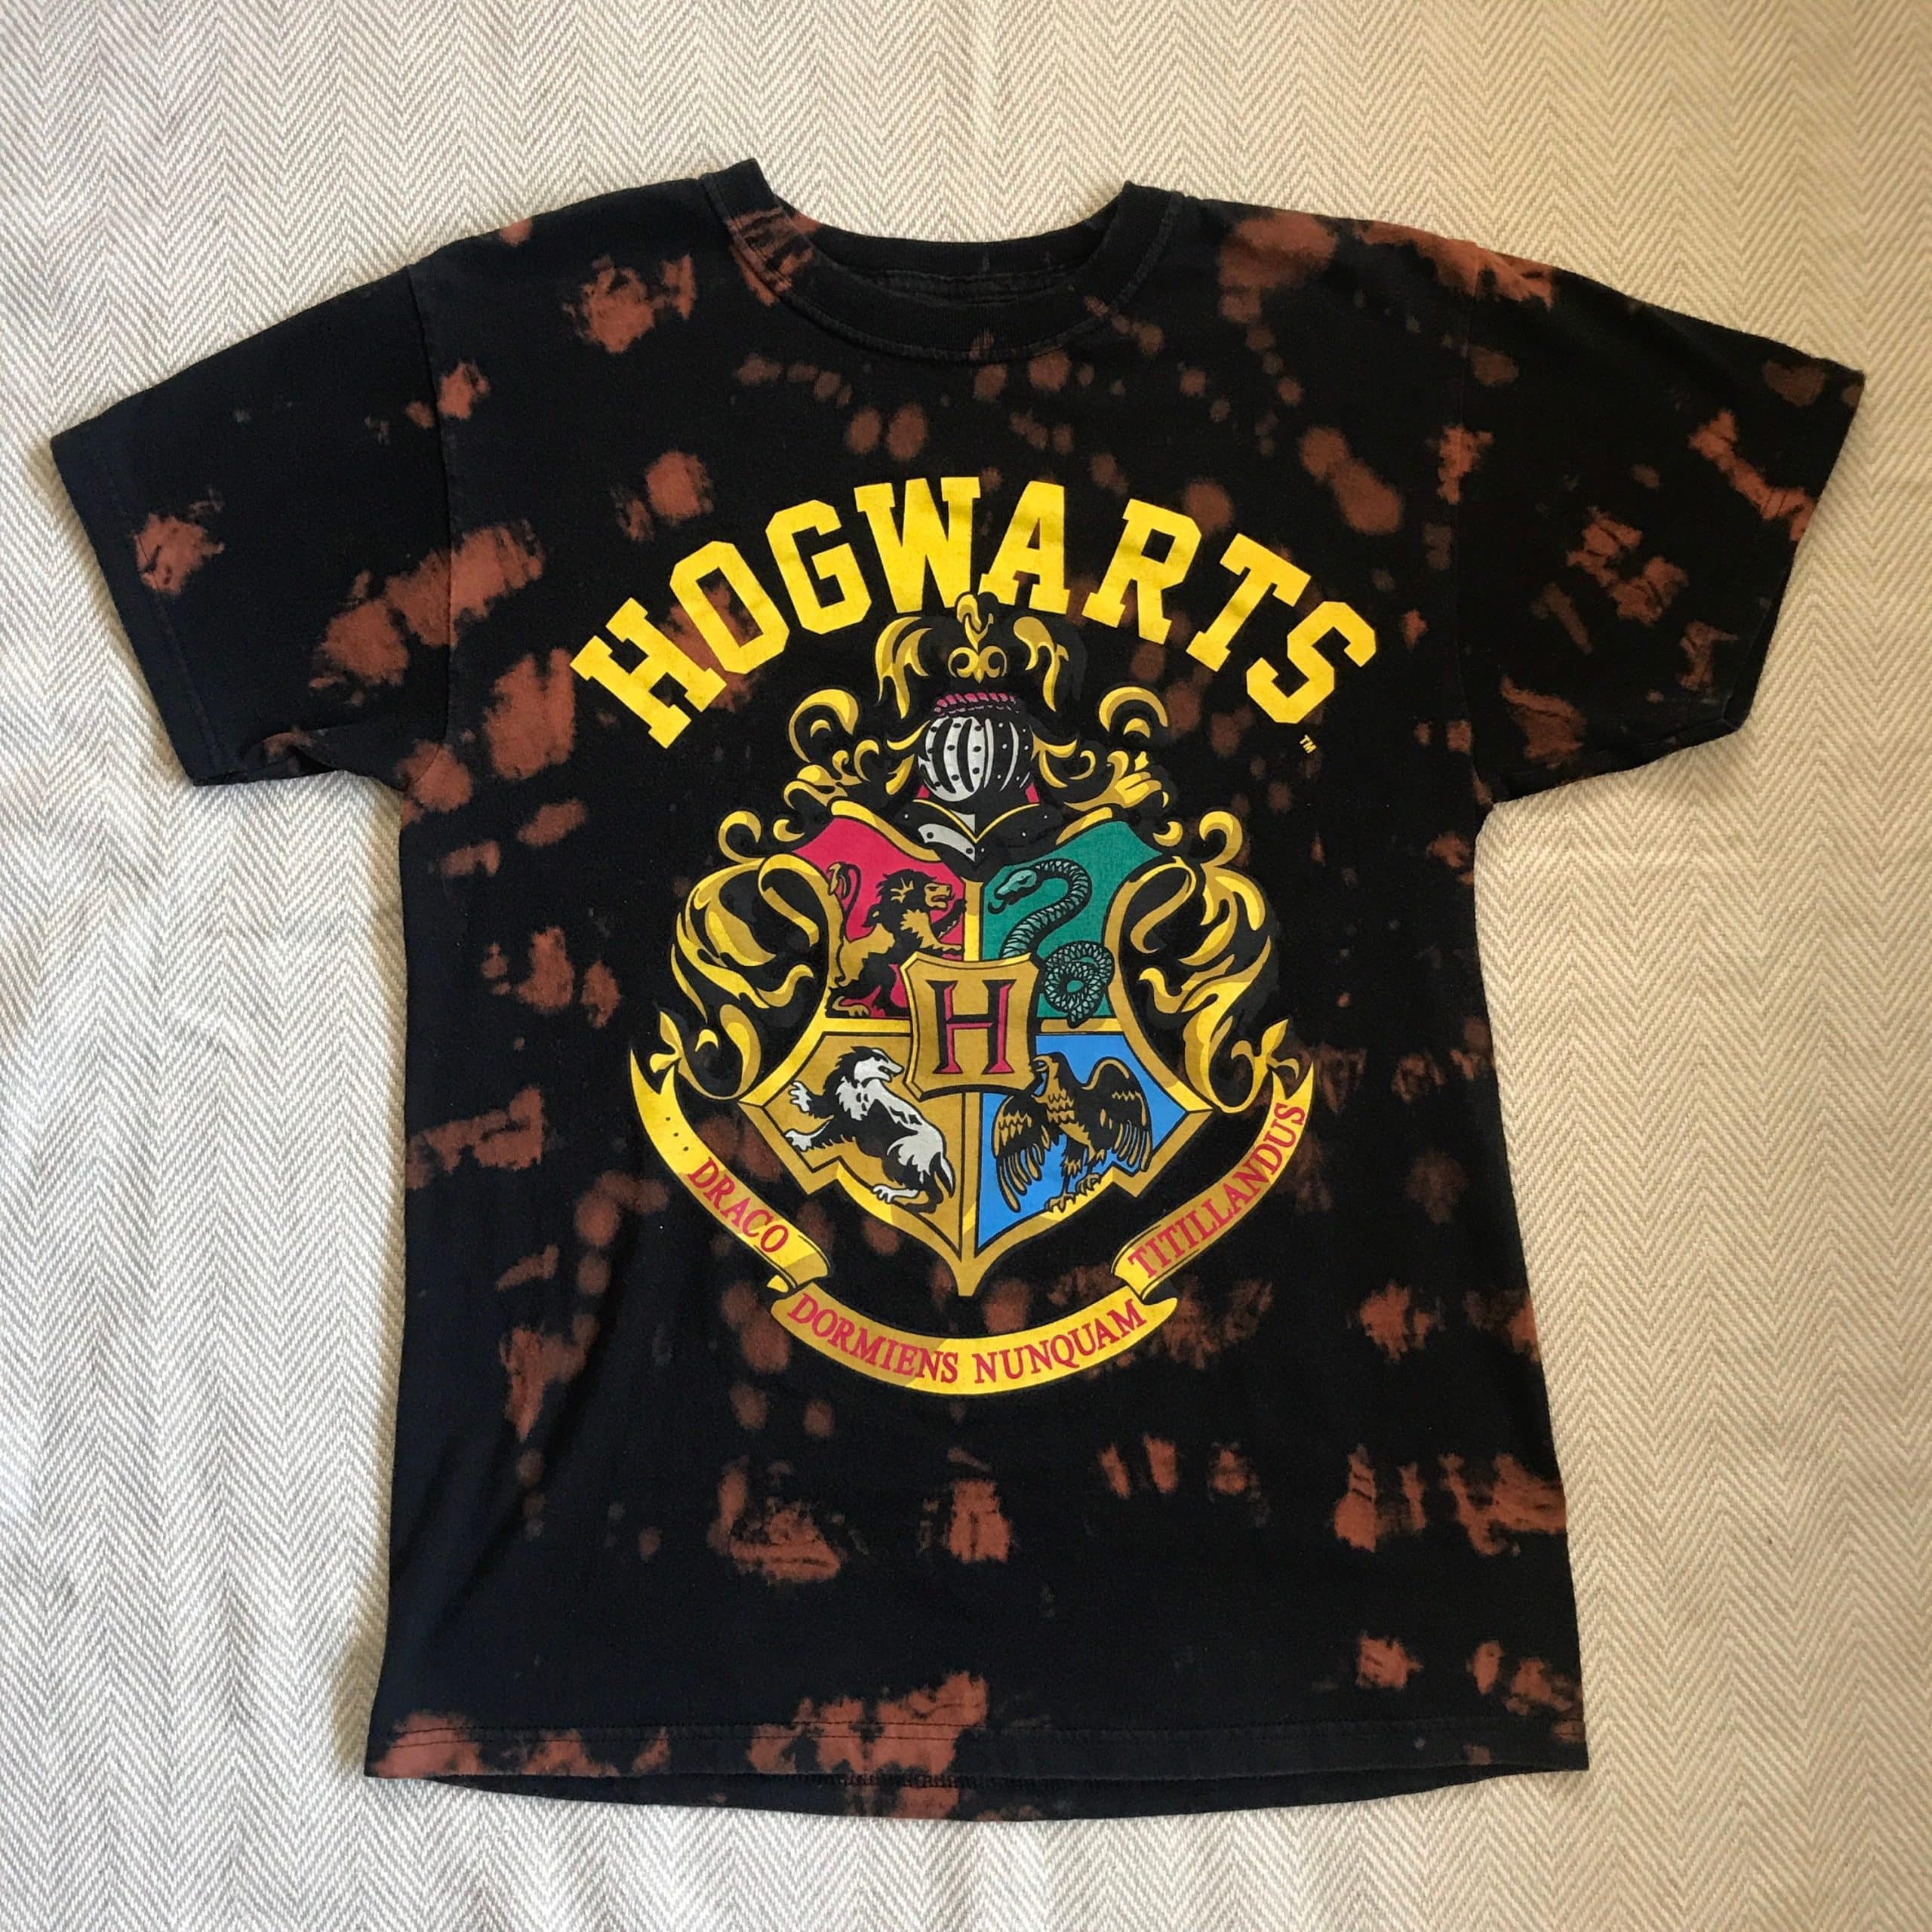 Hogwarts Harry potter shirt bleach tie dye graphic tee